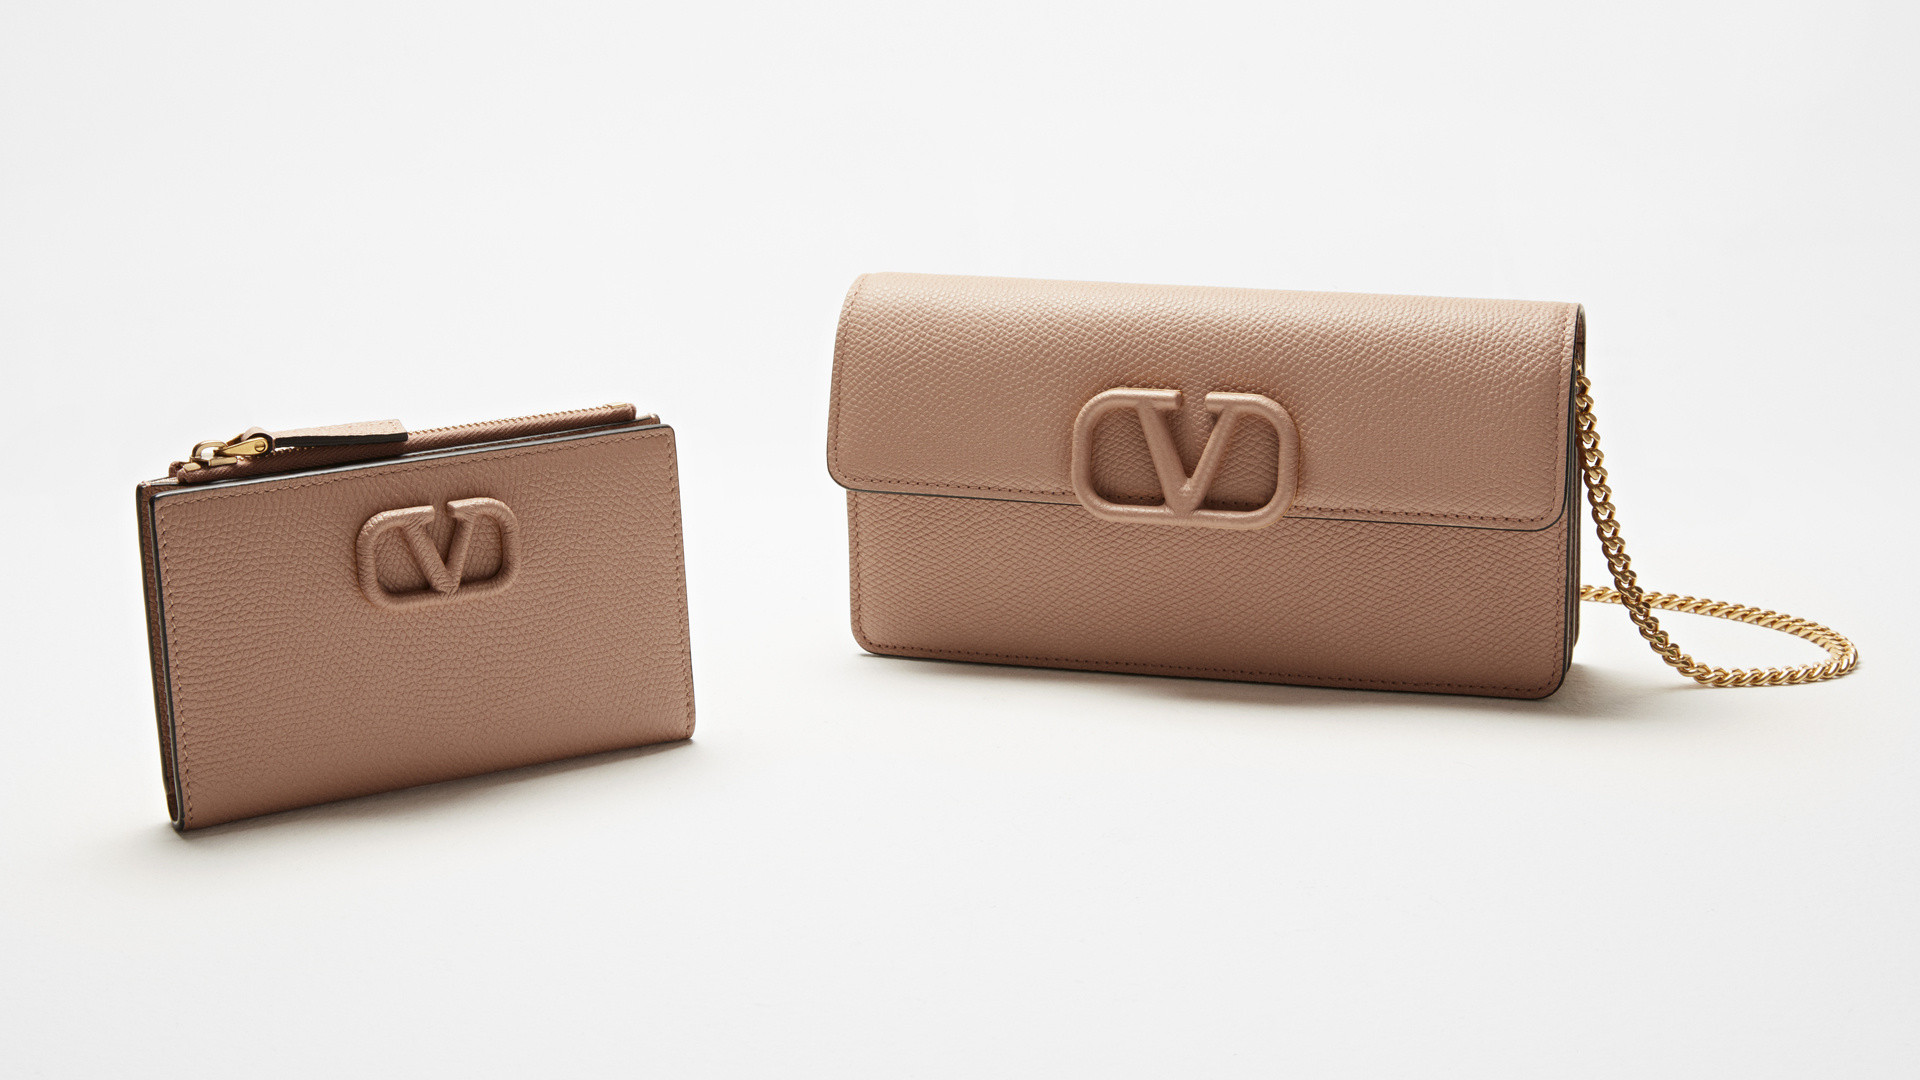 Valentino Garavani Women's Leather Goods Accessories | Valentino US